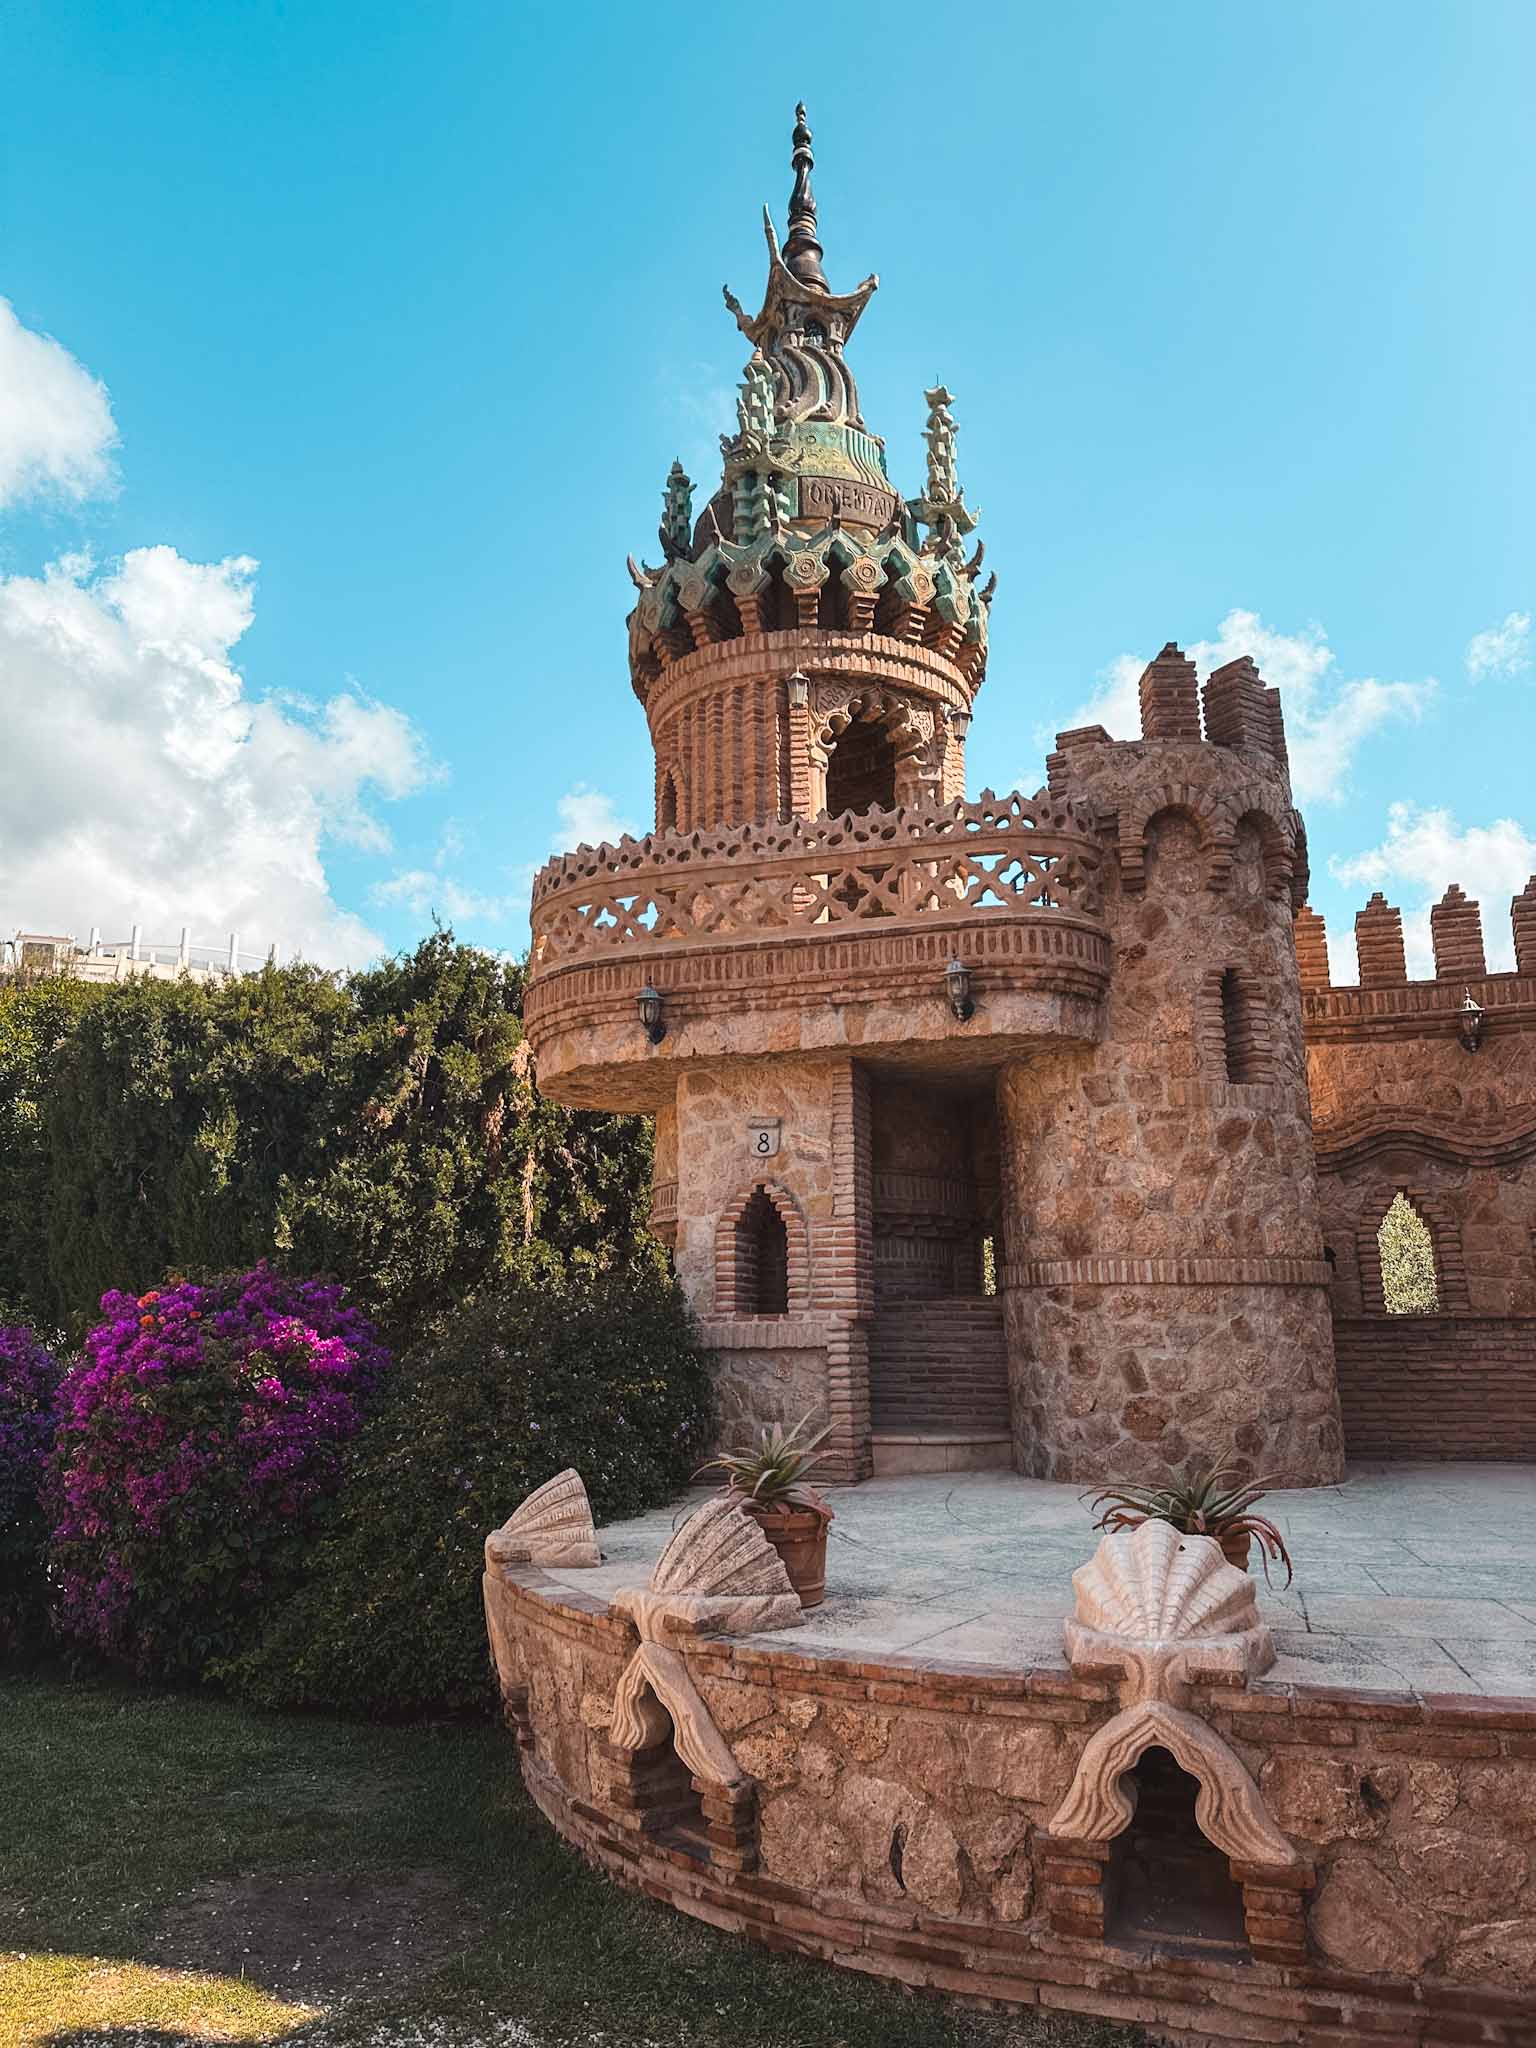 Unique hidden gems in Andalusia - Castillo de Colomares